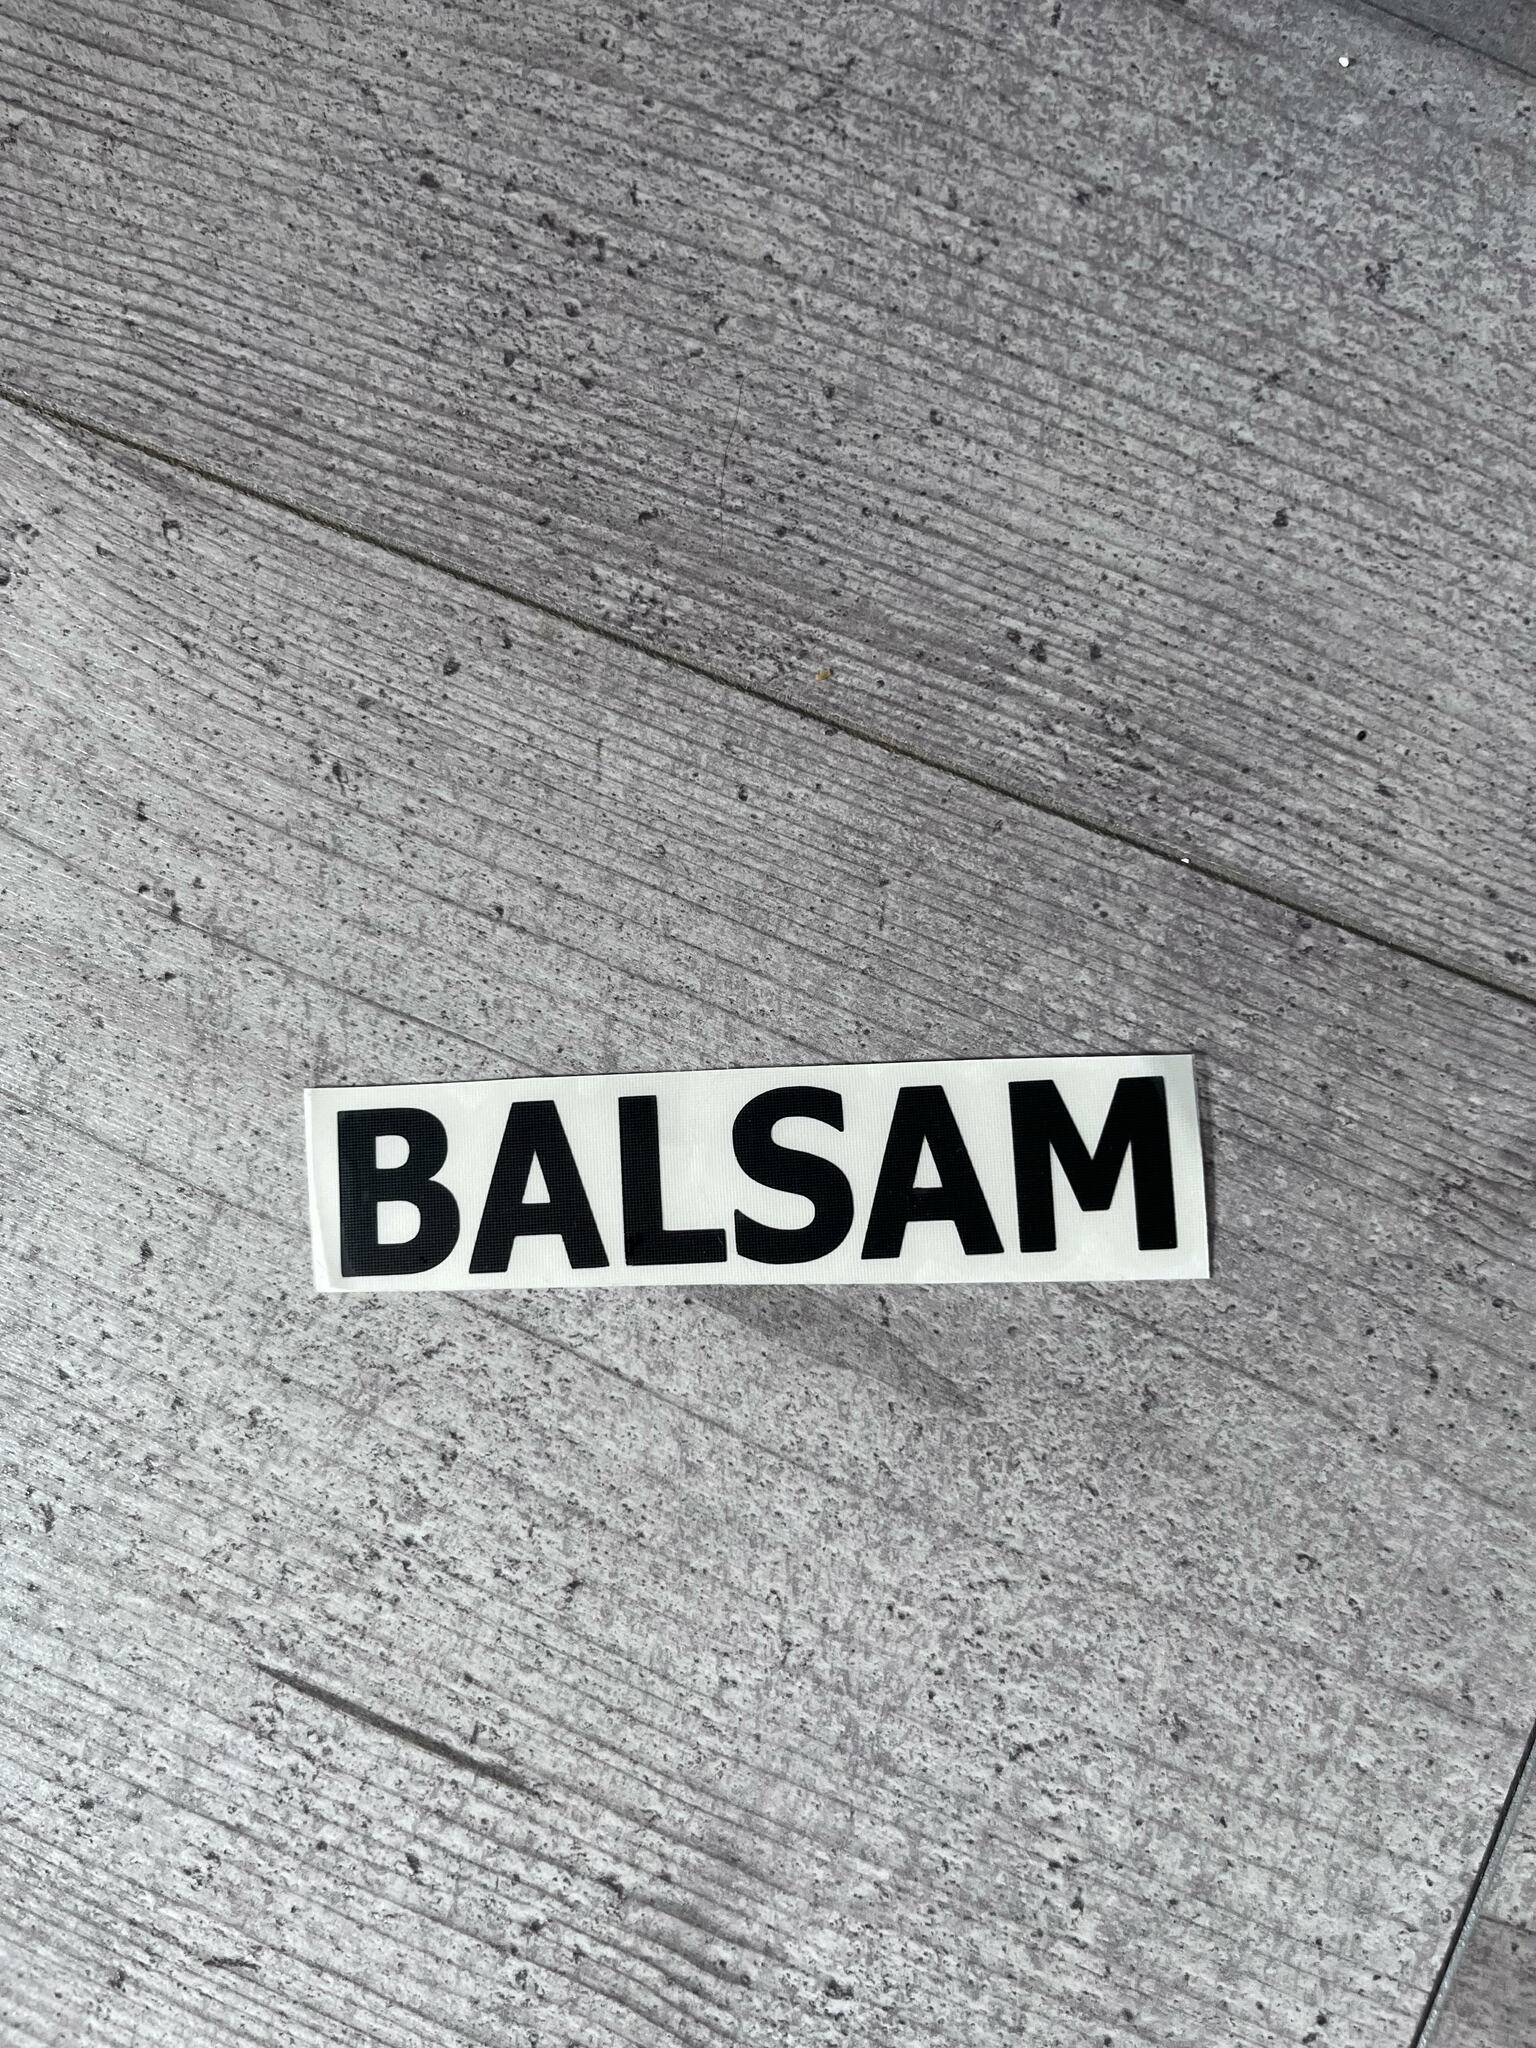 Dekal, Balsam